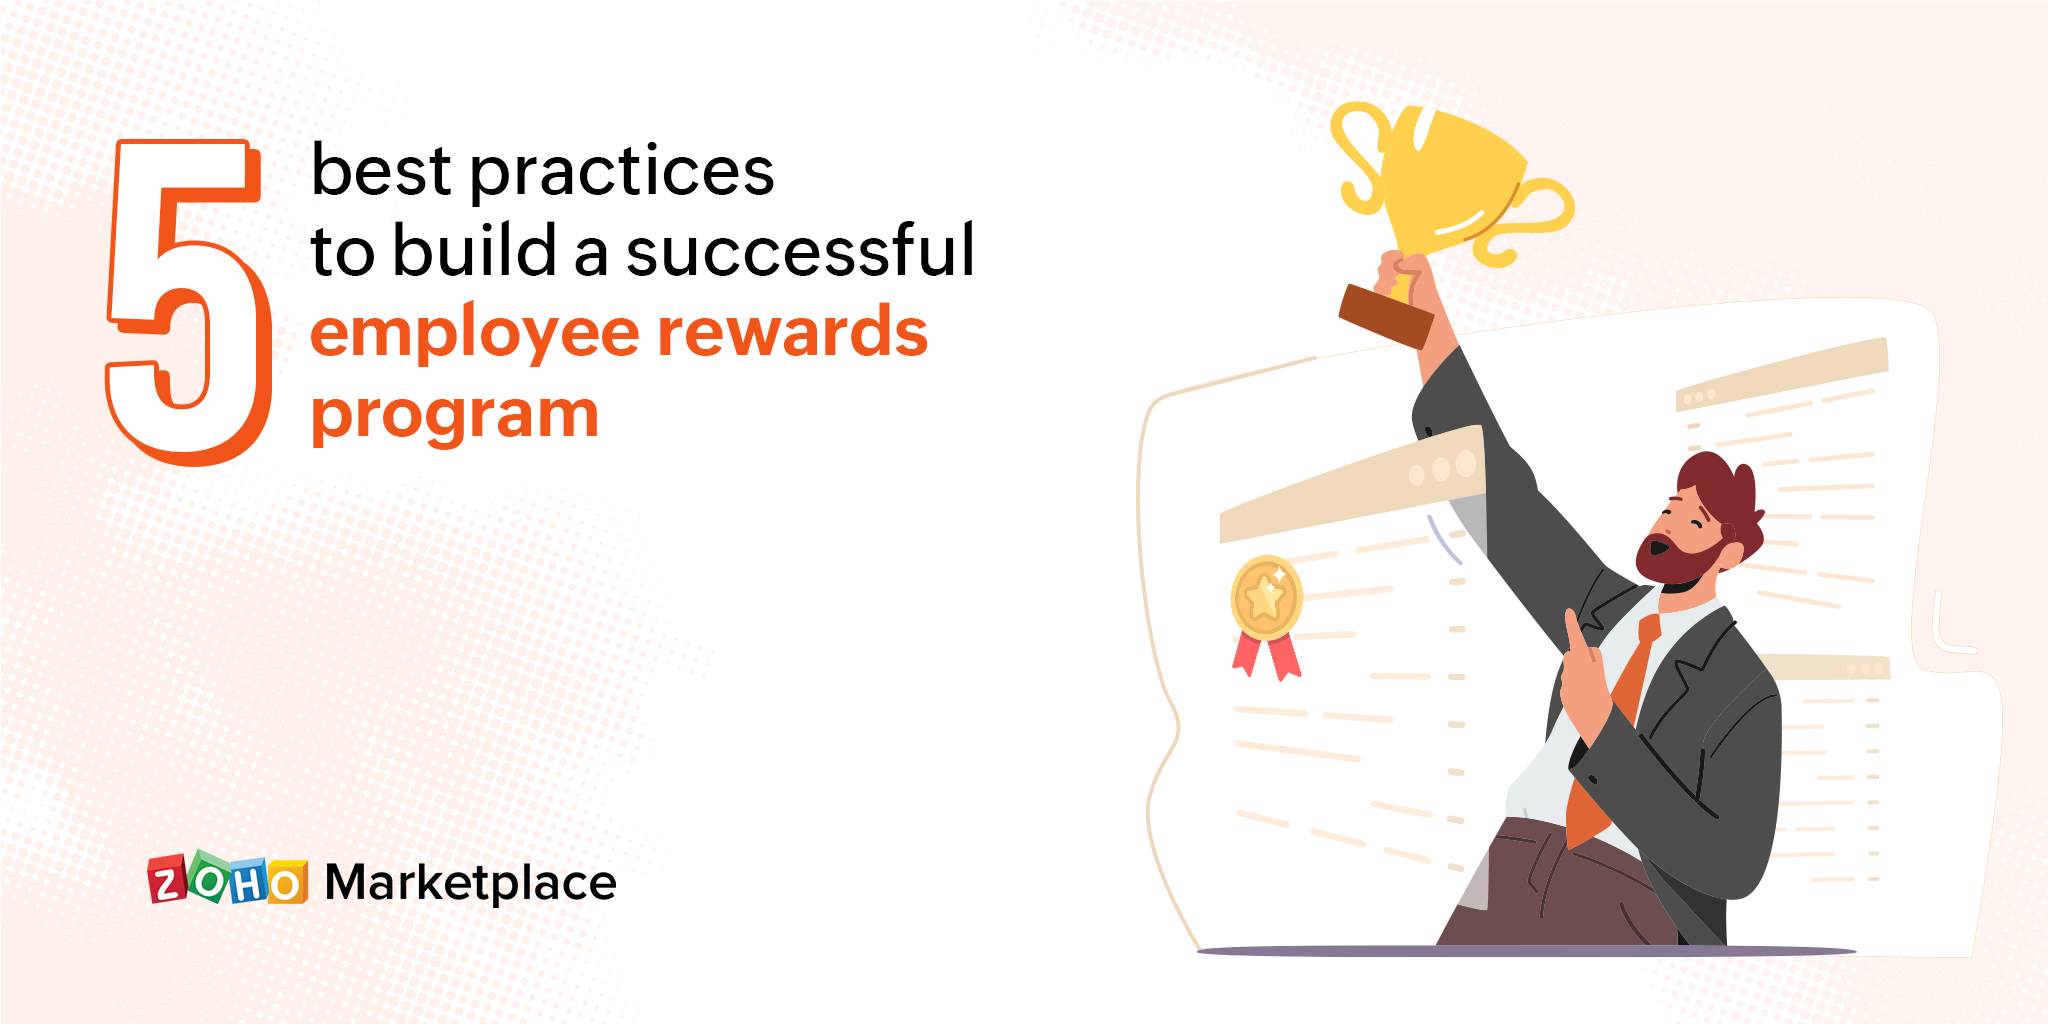 5 best practices to build a successful employee rewards program